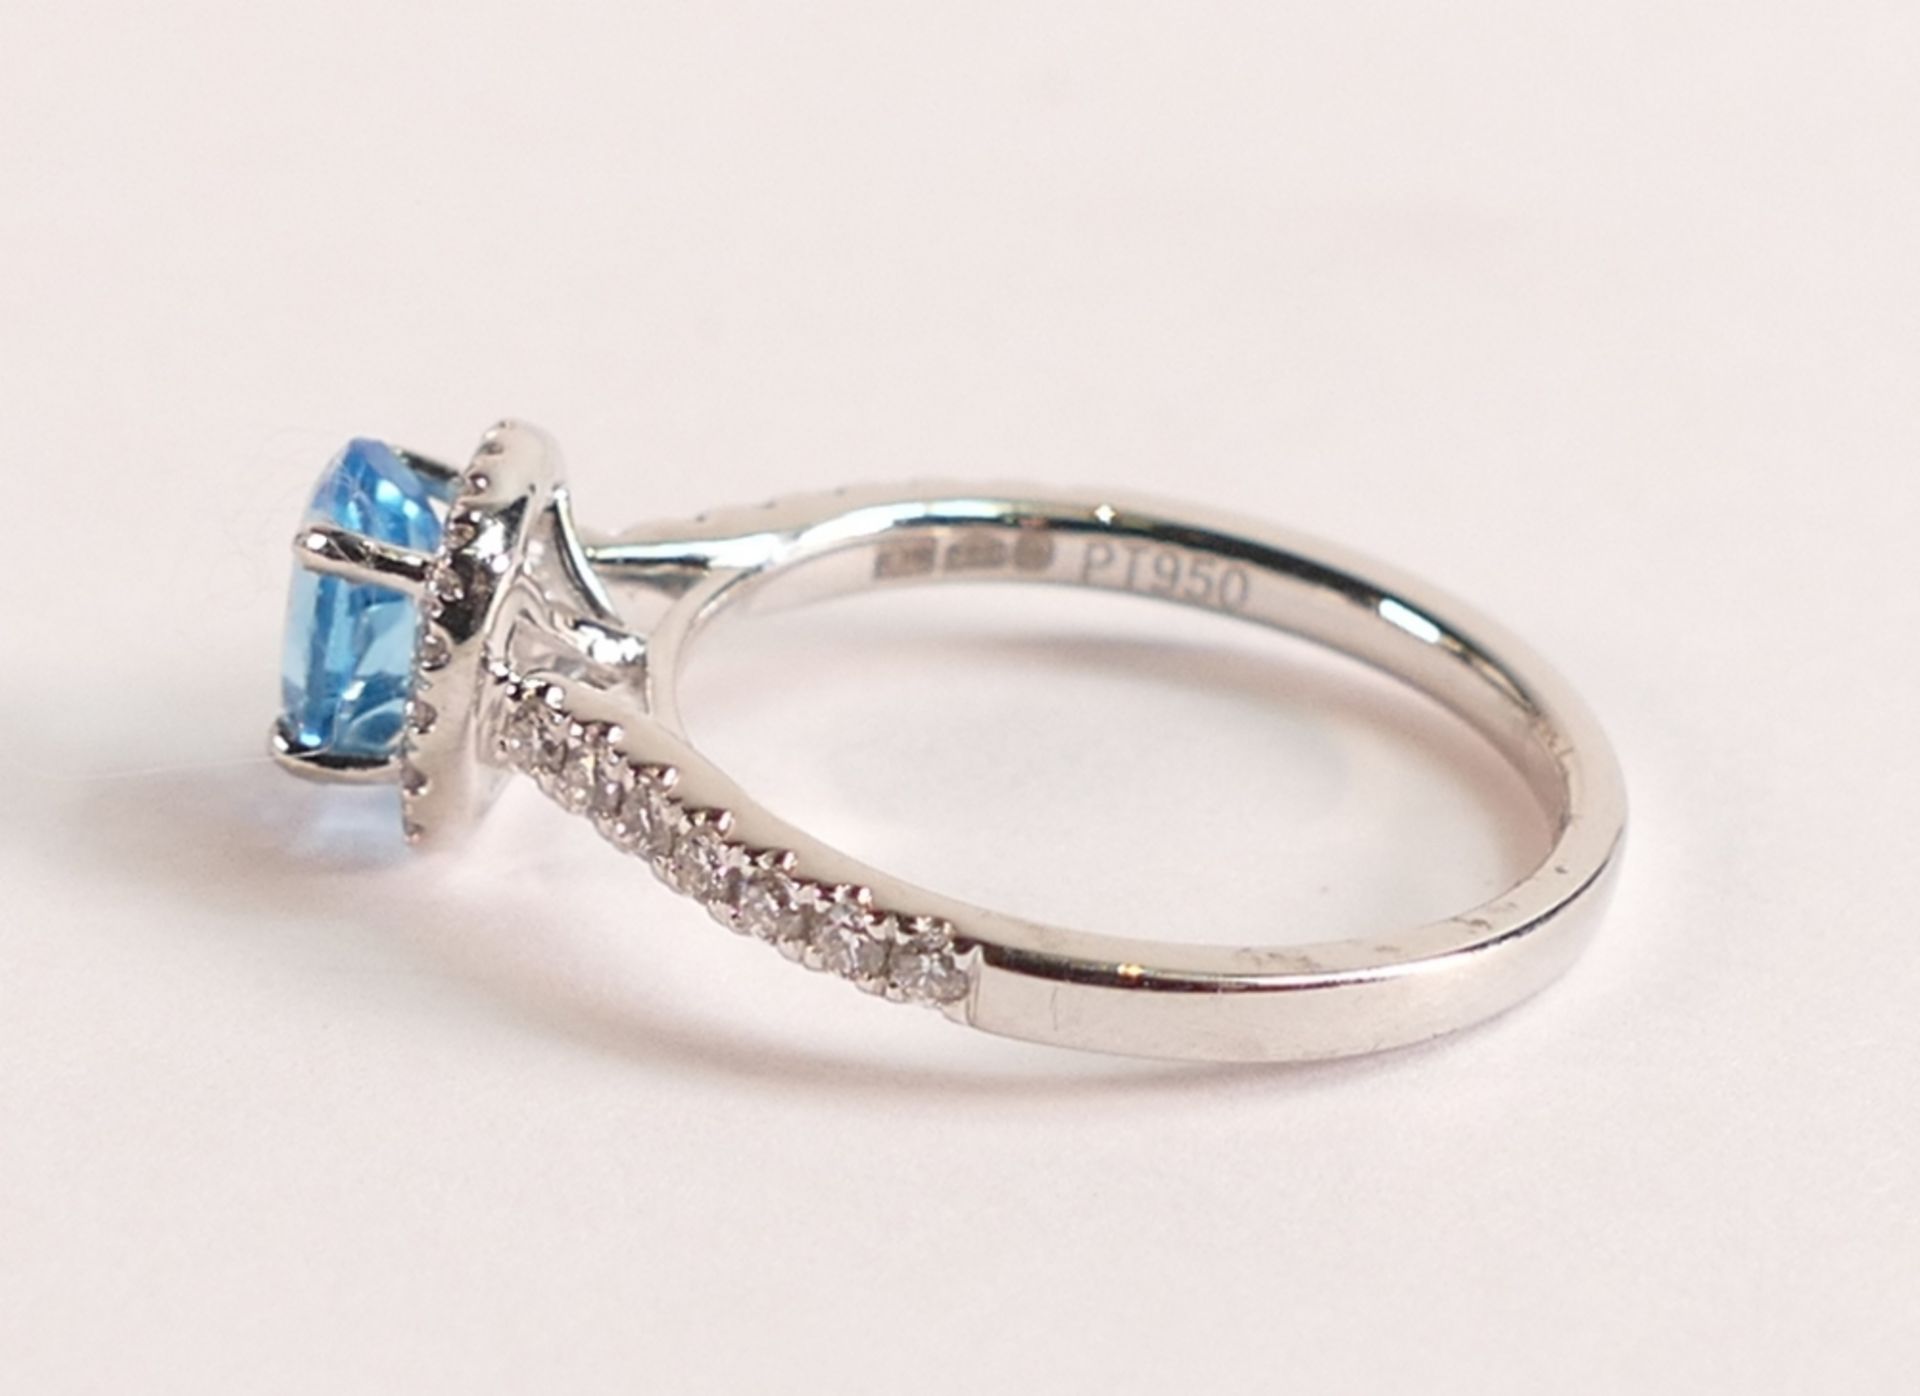 Oval Aquamarine And Diamond Platinum Ring - Aquamarine stone dimensions 7.15mm x 5.25mm. Diamond - Image 2 of 3